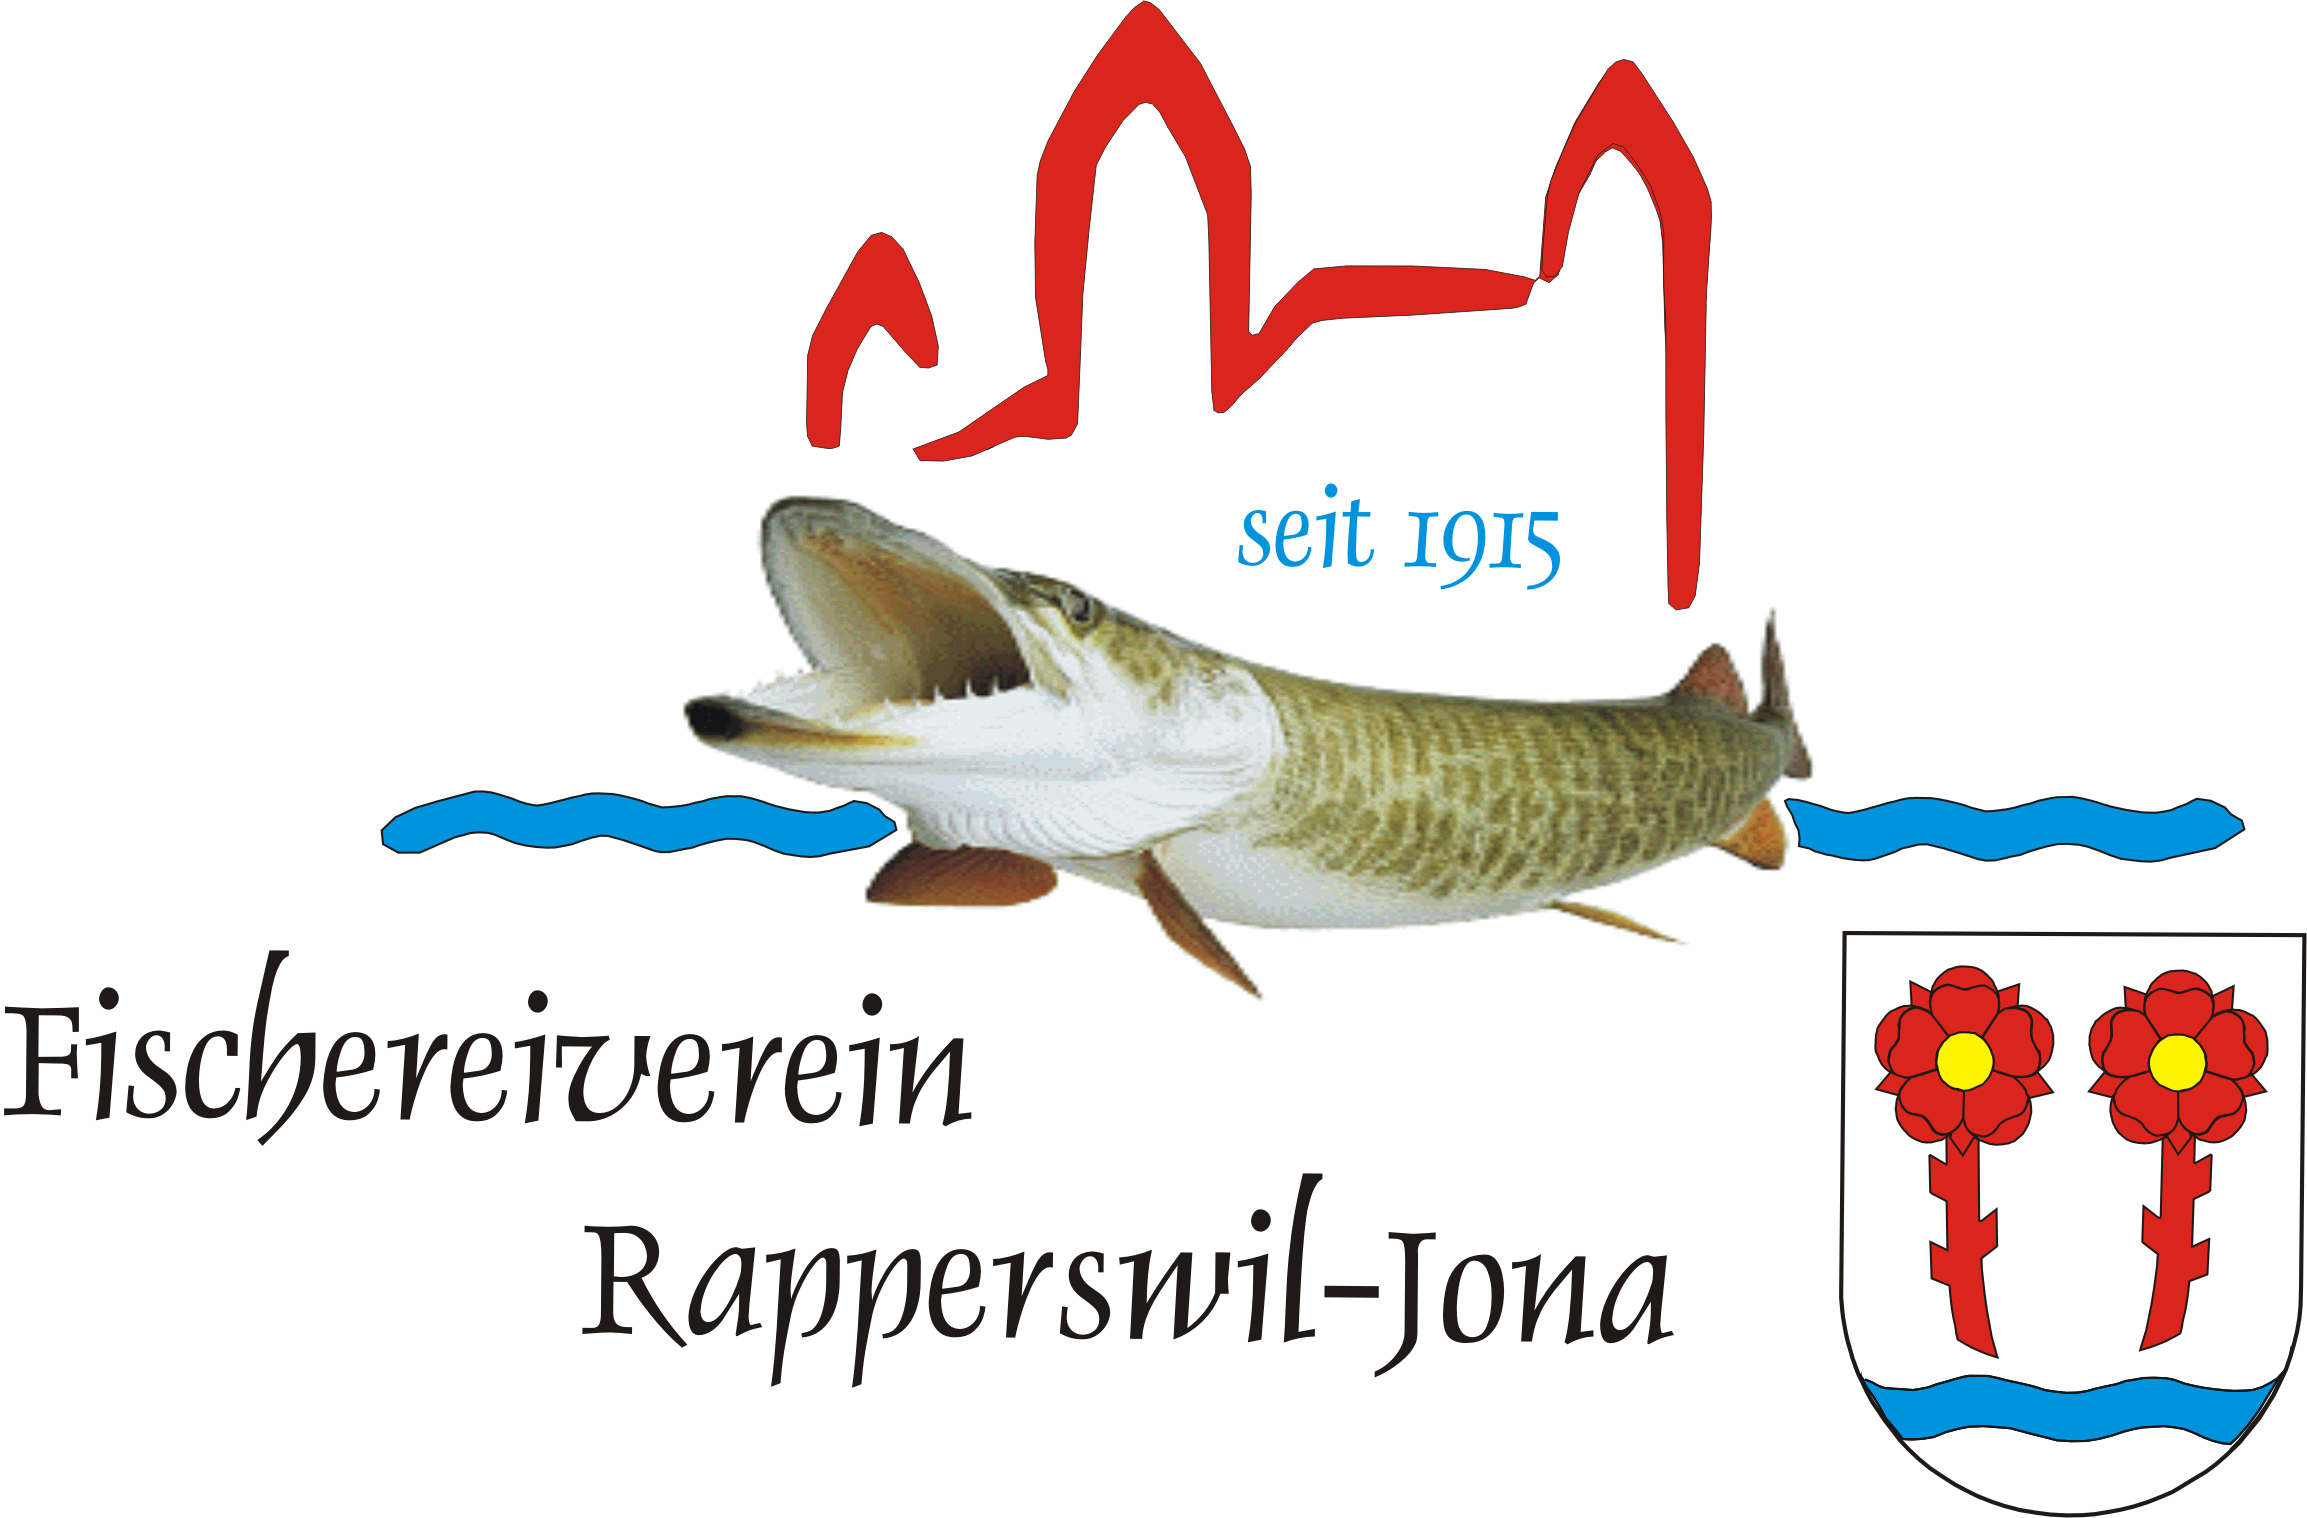 Fischereiverein Rapperswil-Jona